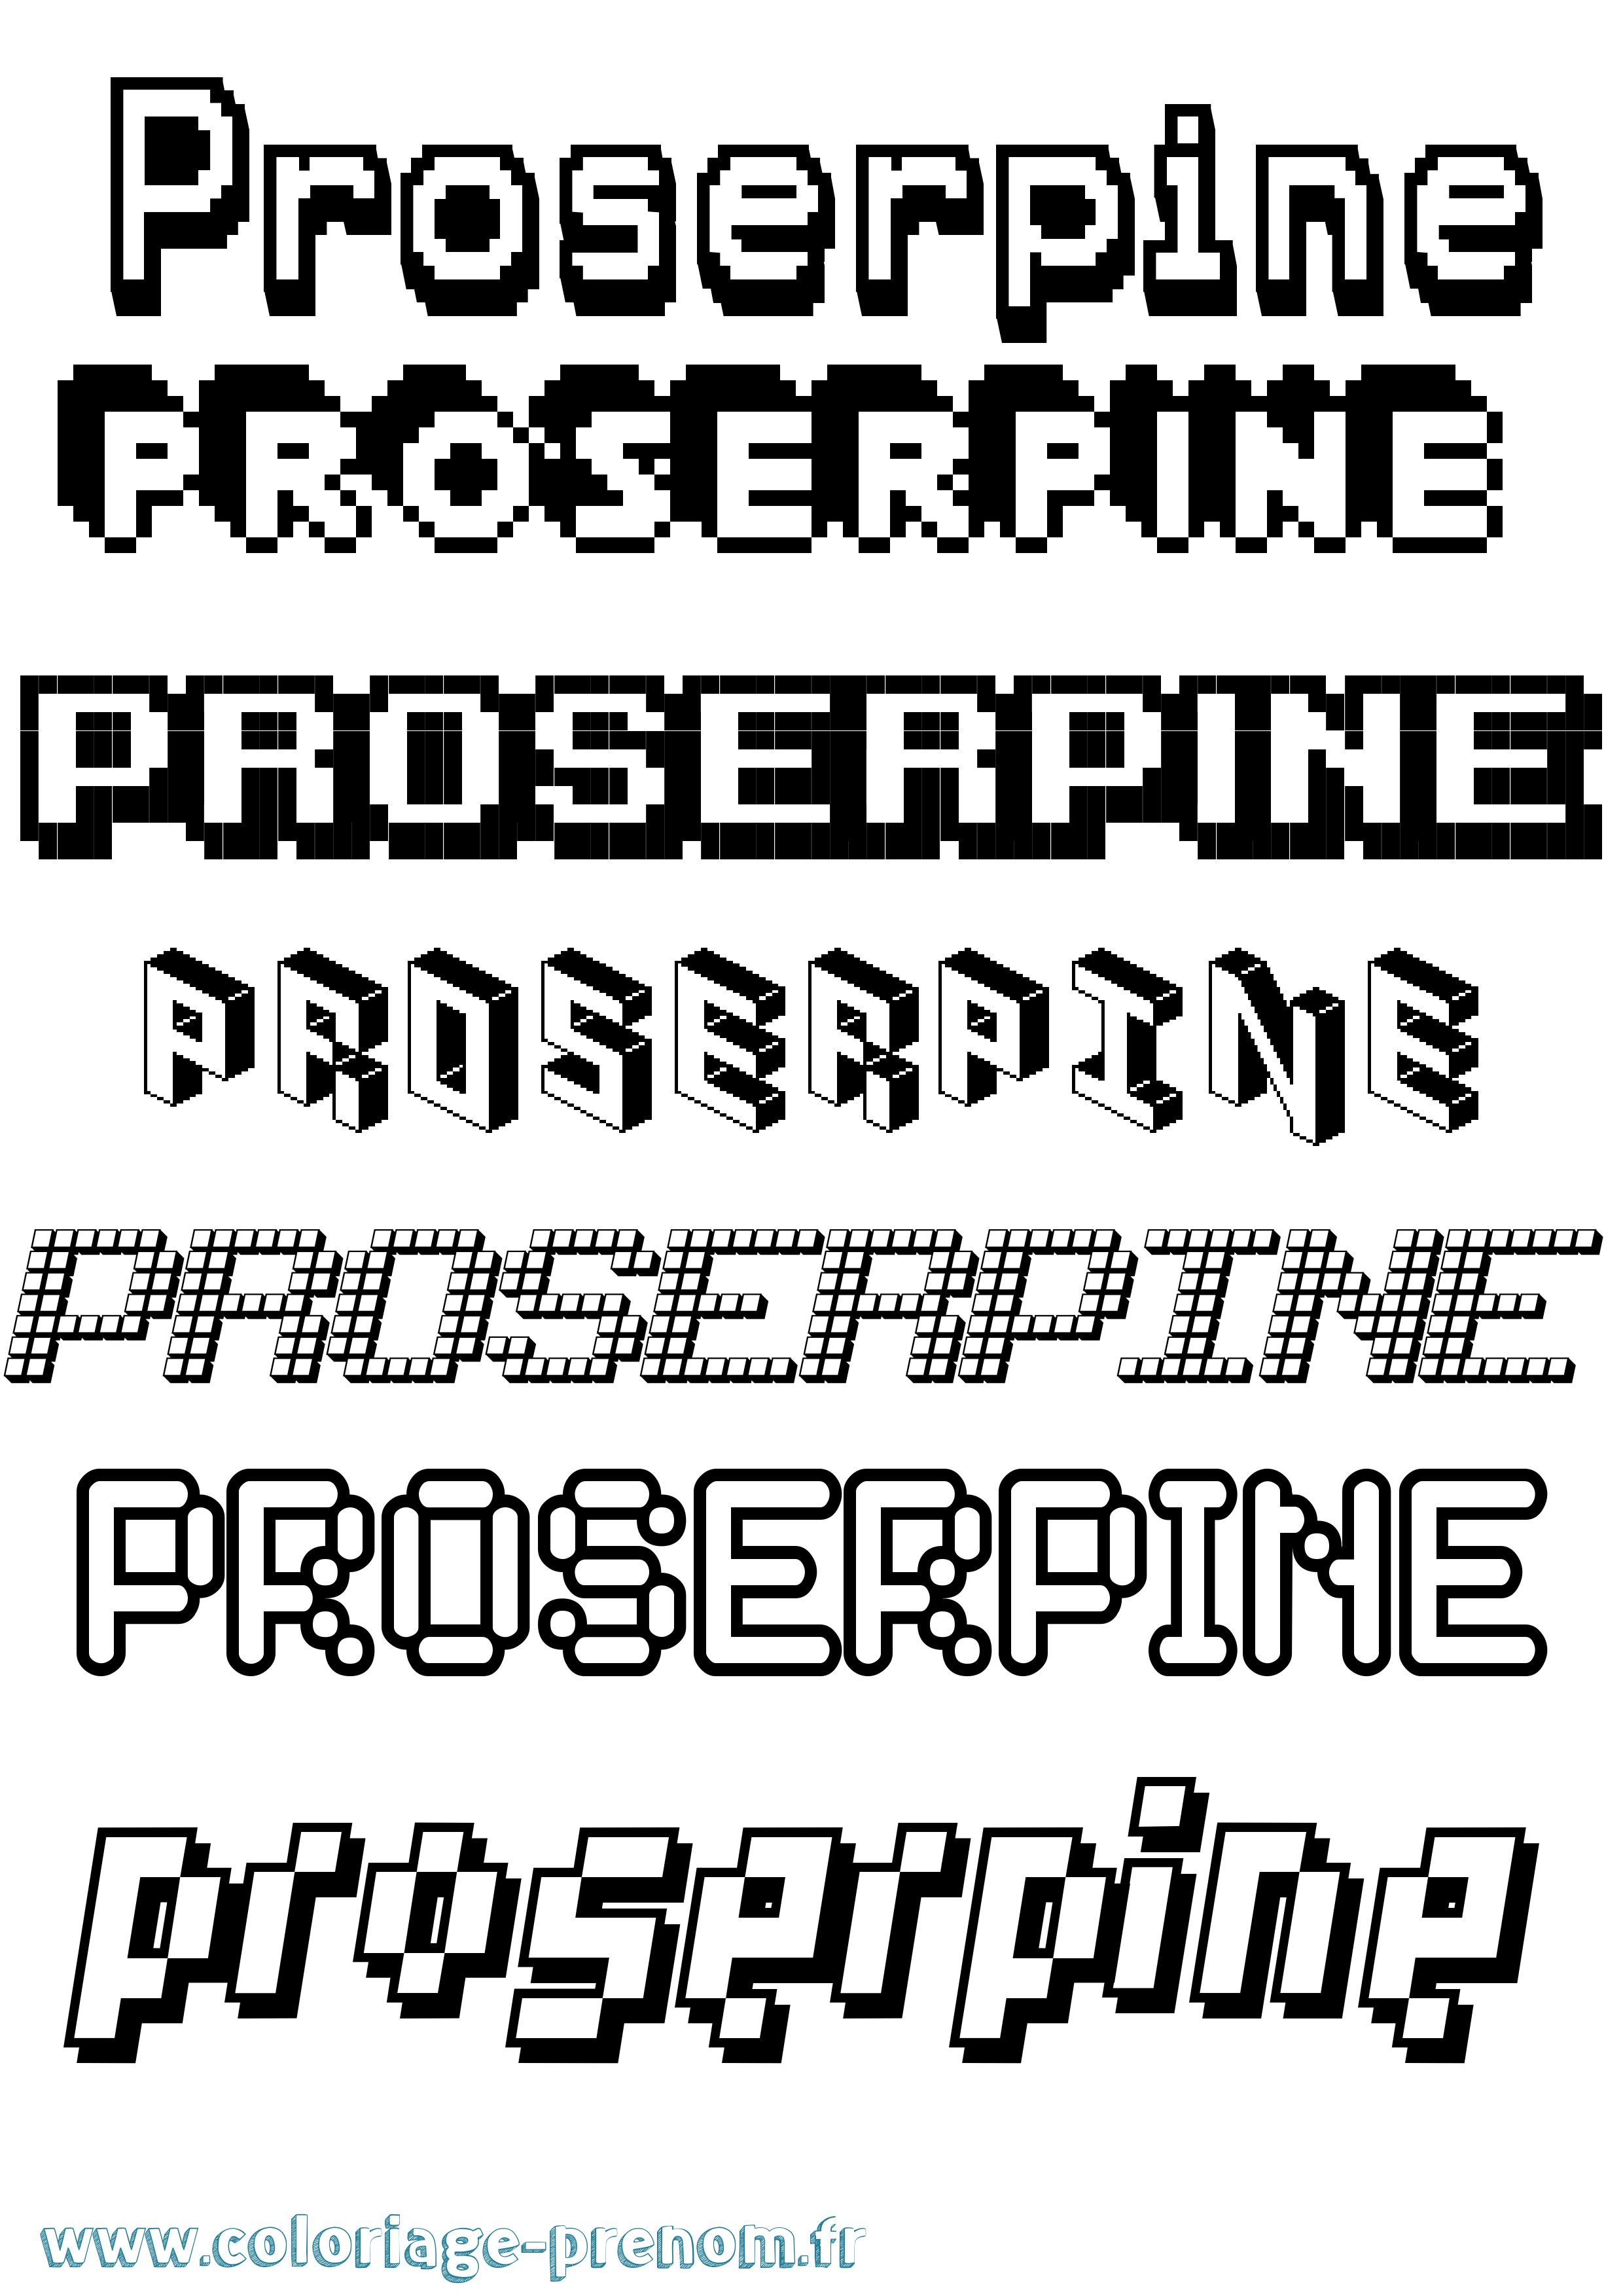 Coloriage prénom Proserpine Pixel